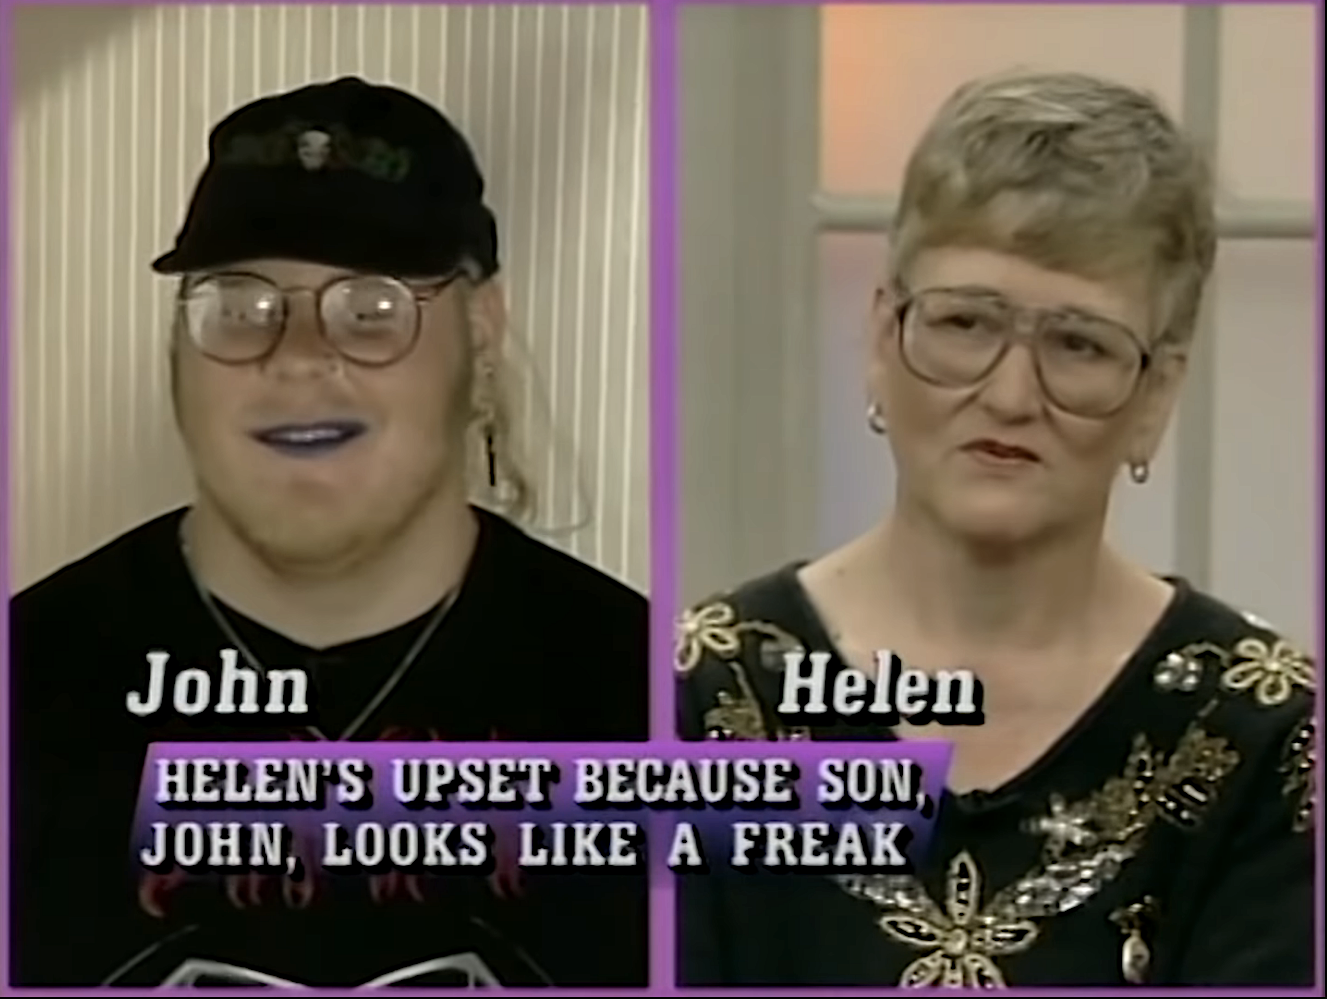 &quot;Helen&#x27;s upset because her son, John, looks like a freak&quot;